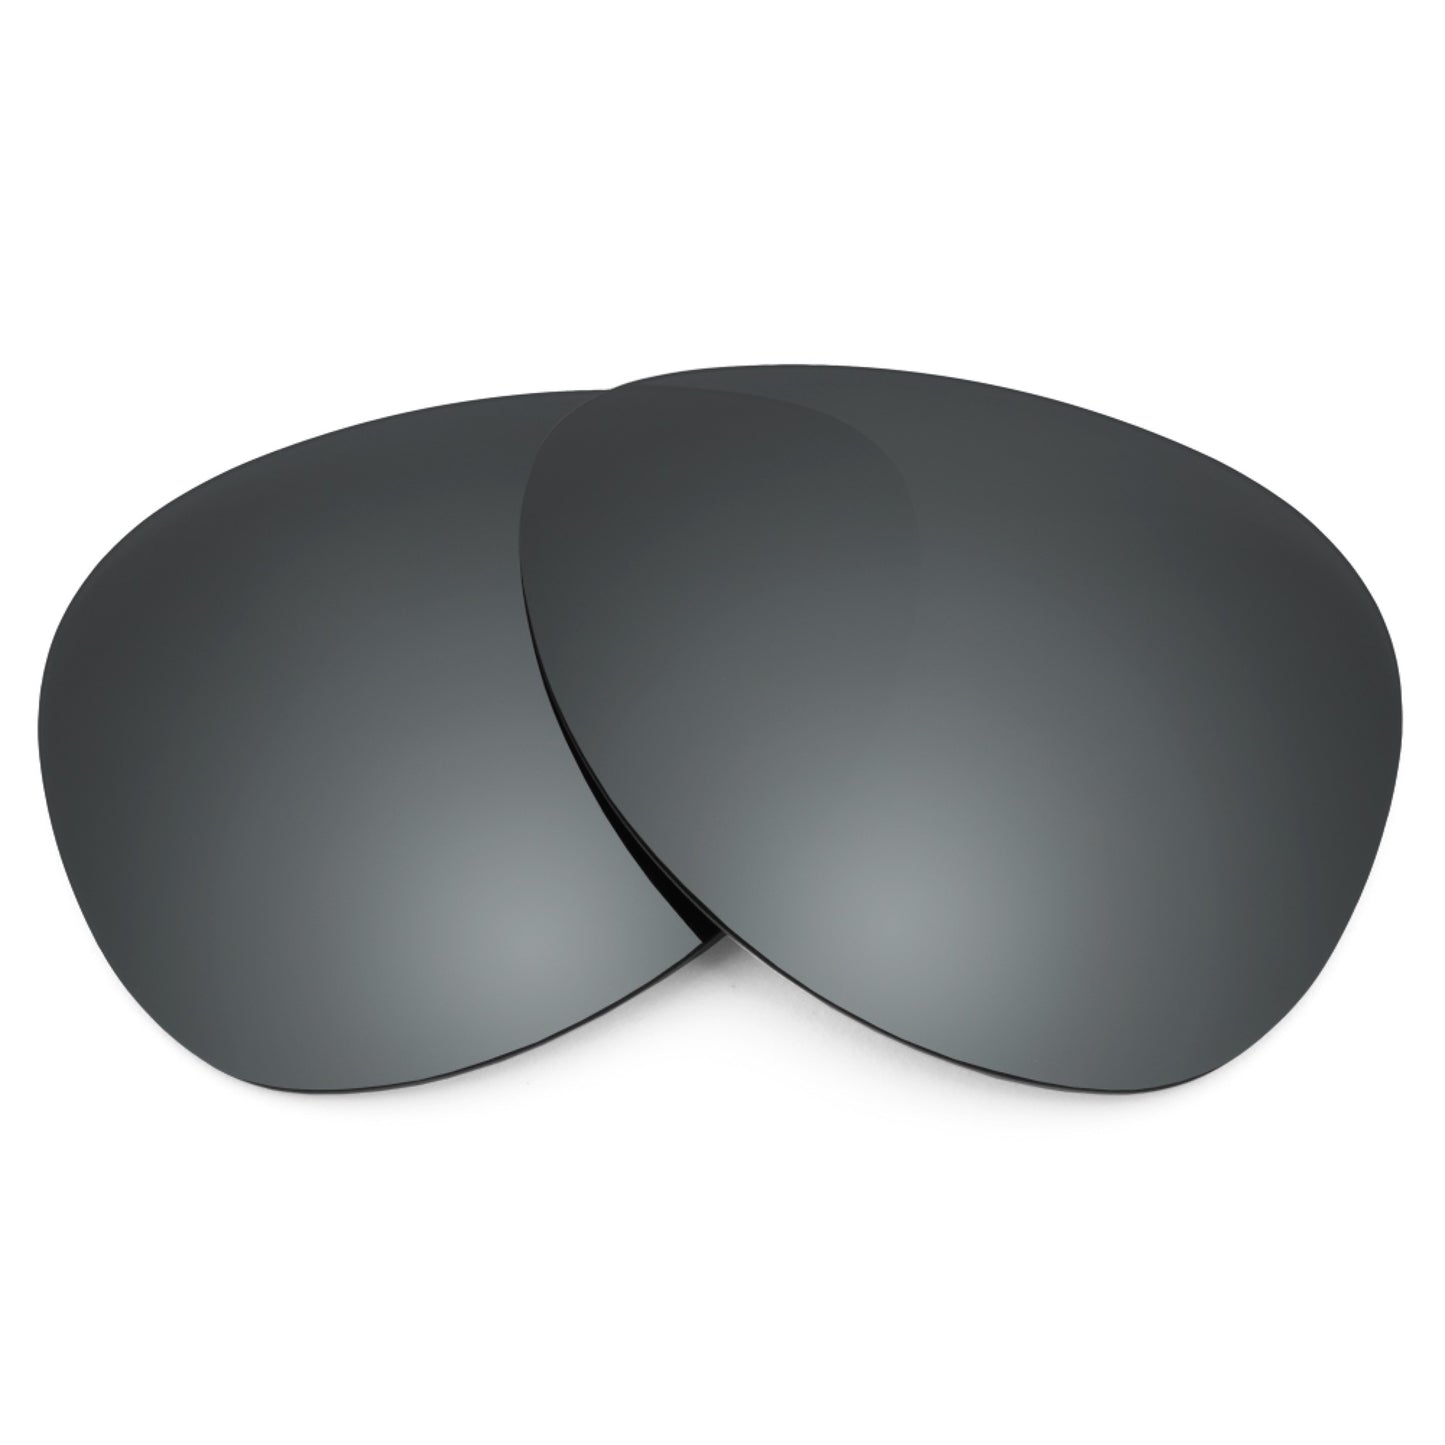 Revant replacement lenses for Ray-Ban RB3533 57mm Elite Polarized Black Chrome